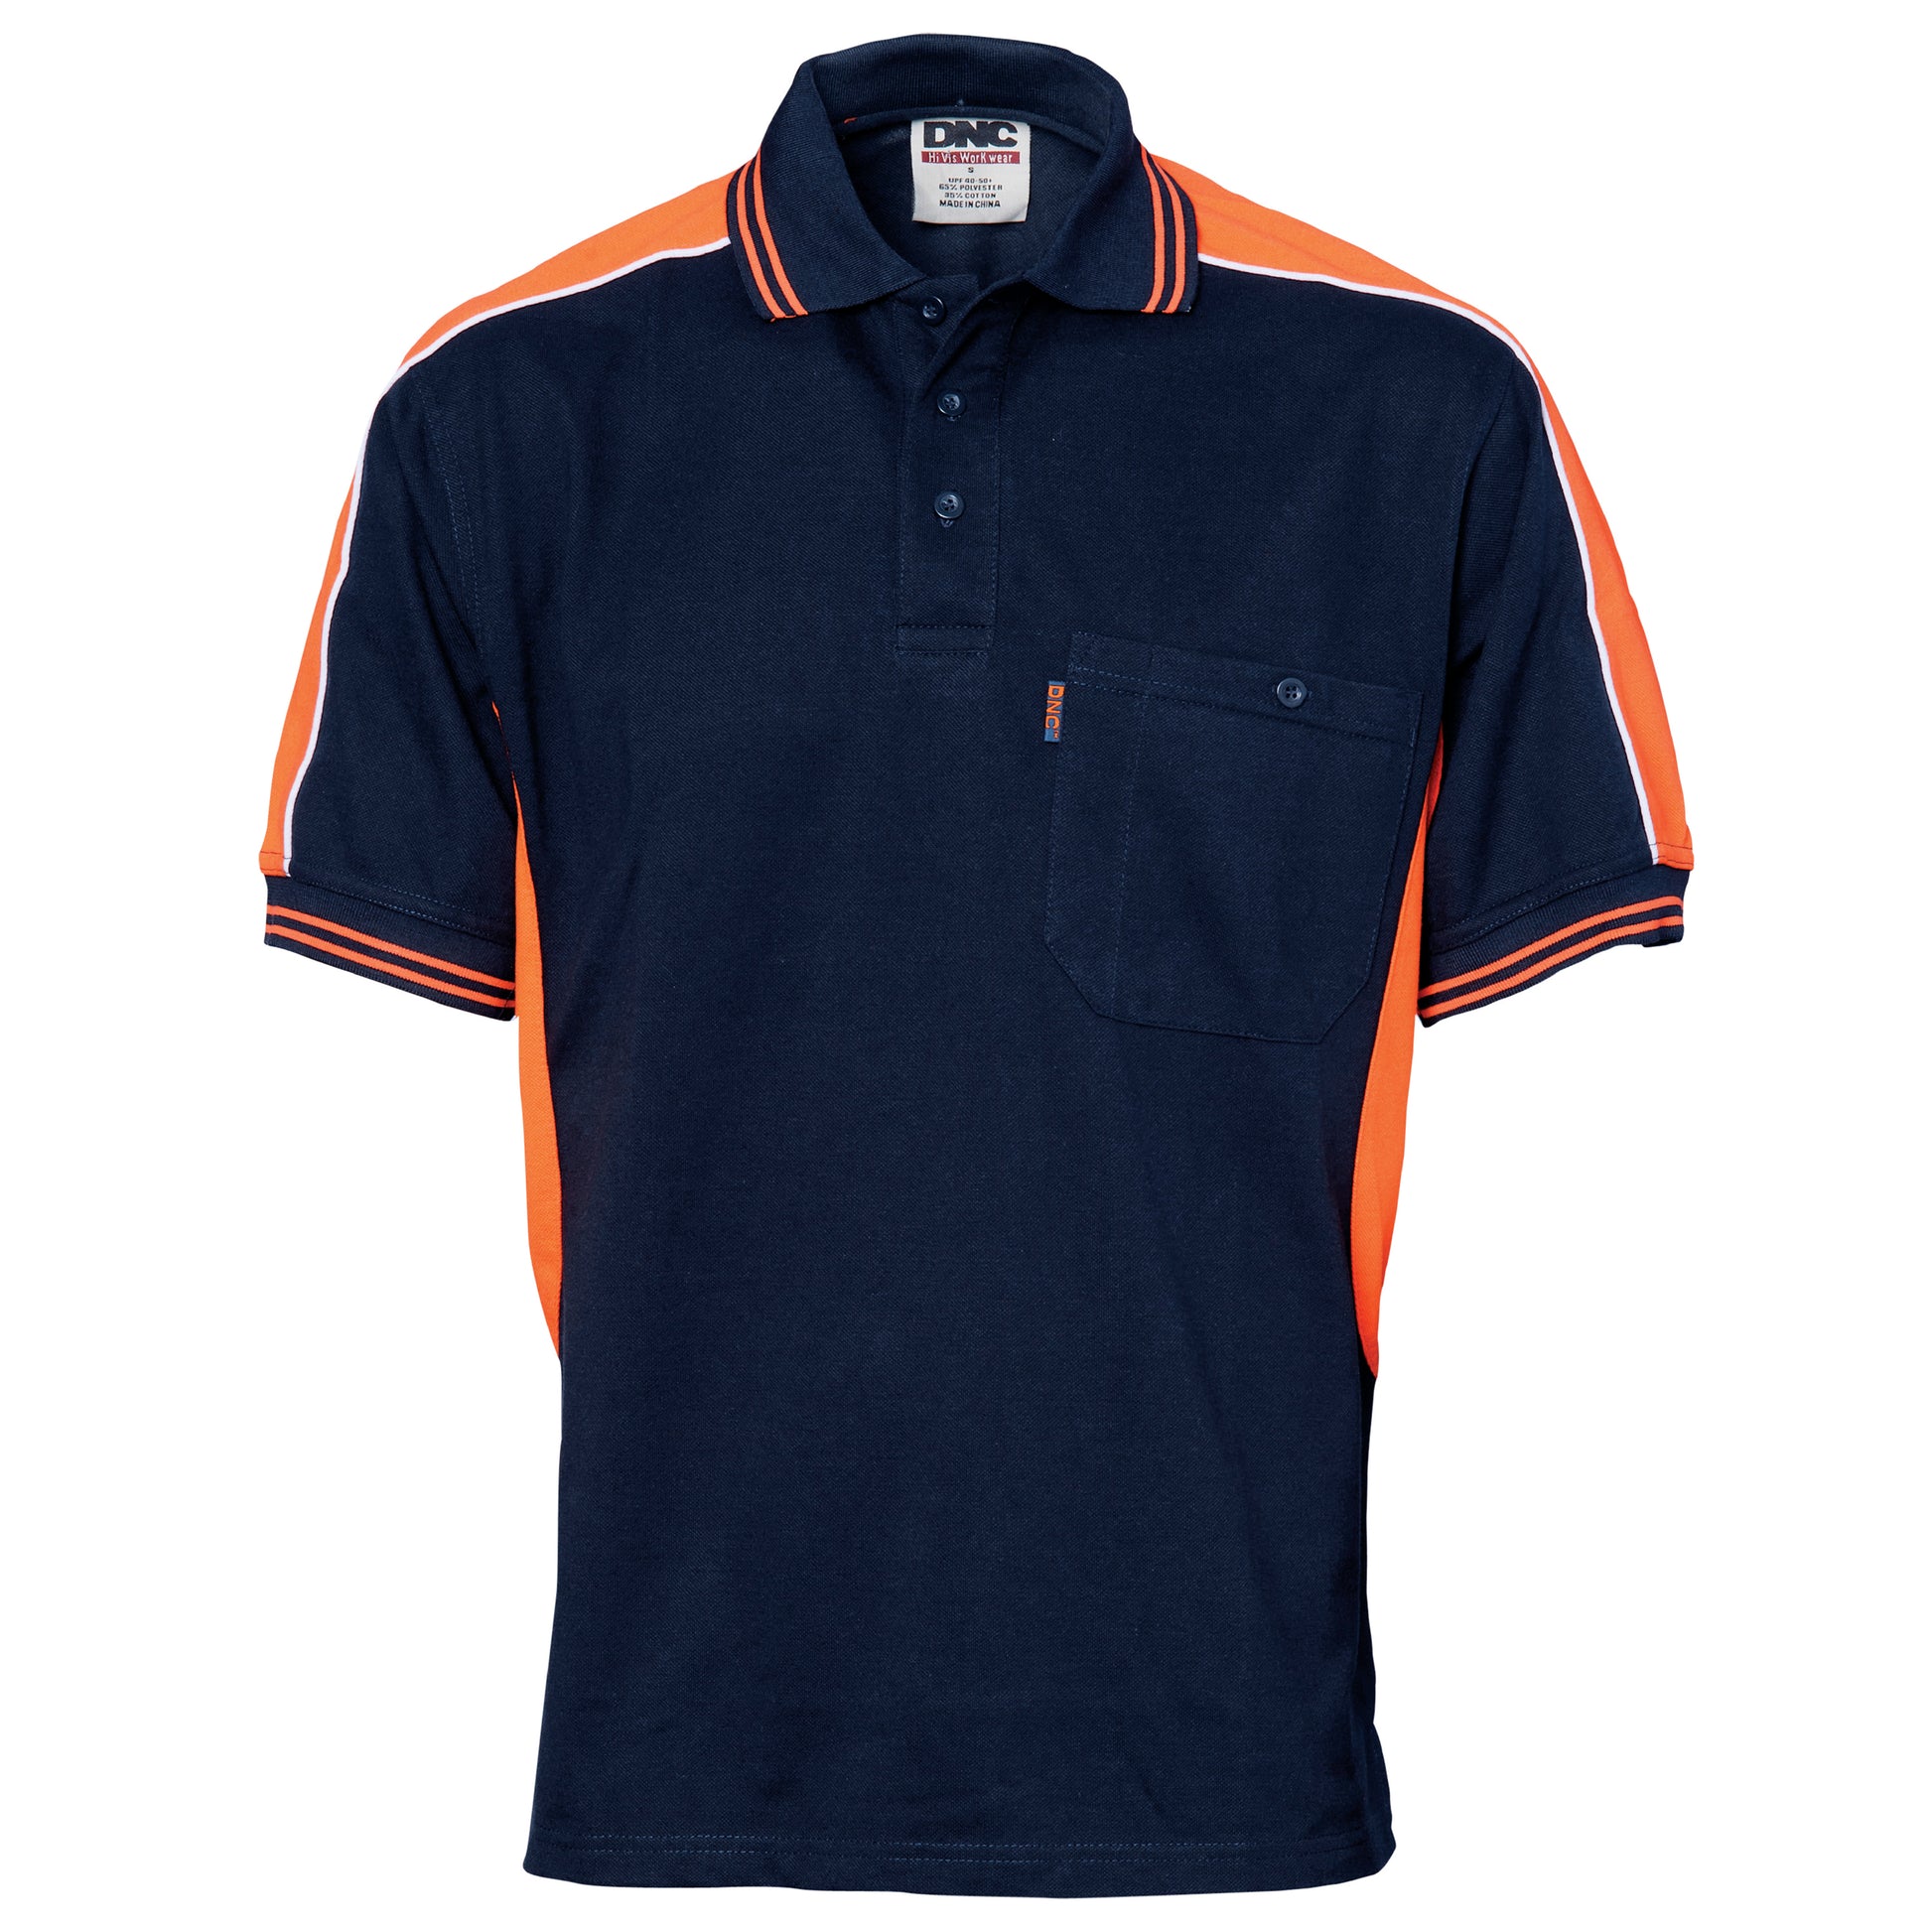 DNC Polyester Cotton Panel Polo Shirt - Short Sleeve 5214 - Star Uniforms Australia